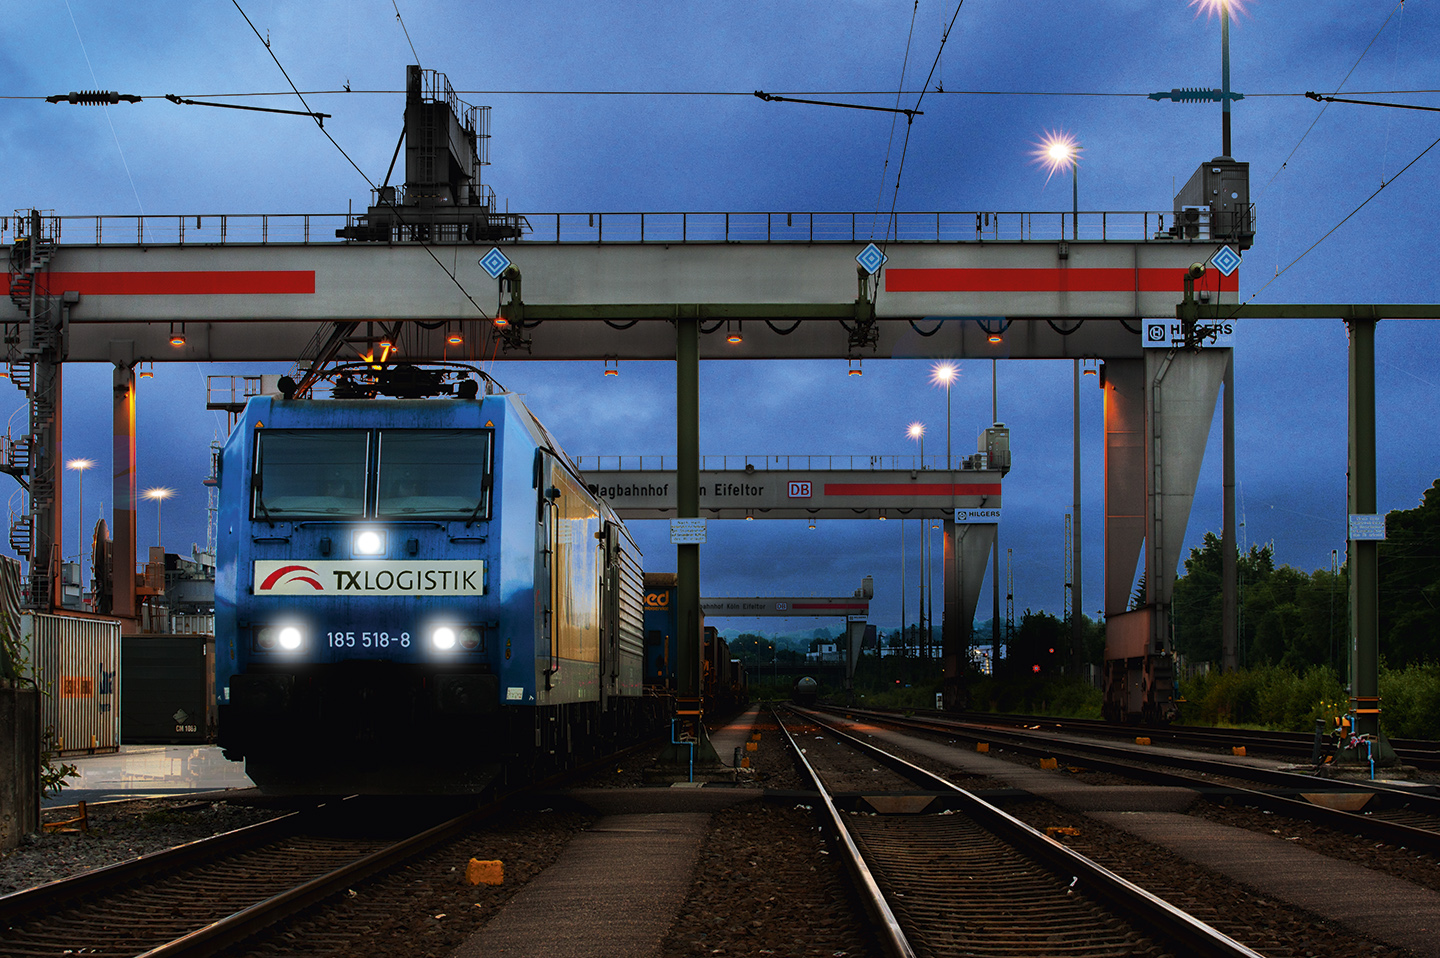 Symbolbild: Ein Güterzug des Eisenbahnverkehrsunternehmens TX Logistik hier im Umschlagbahnhof Köln Eifeltor kurz vor der Abfahrt. (Foto: © TX Logistik)